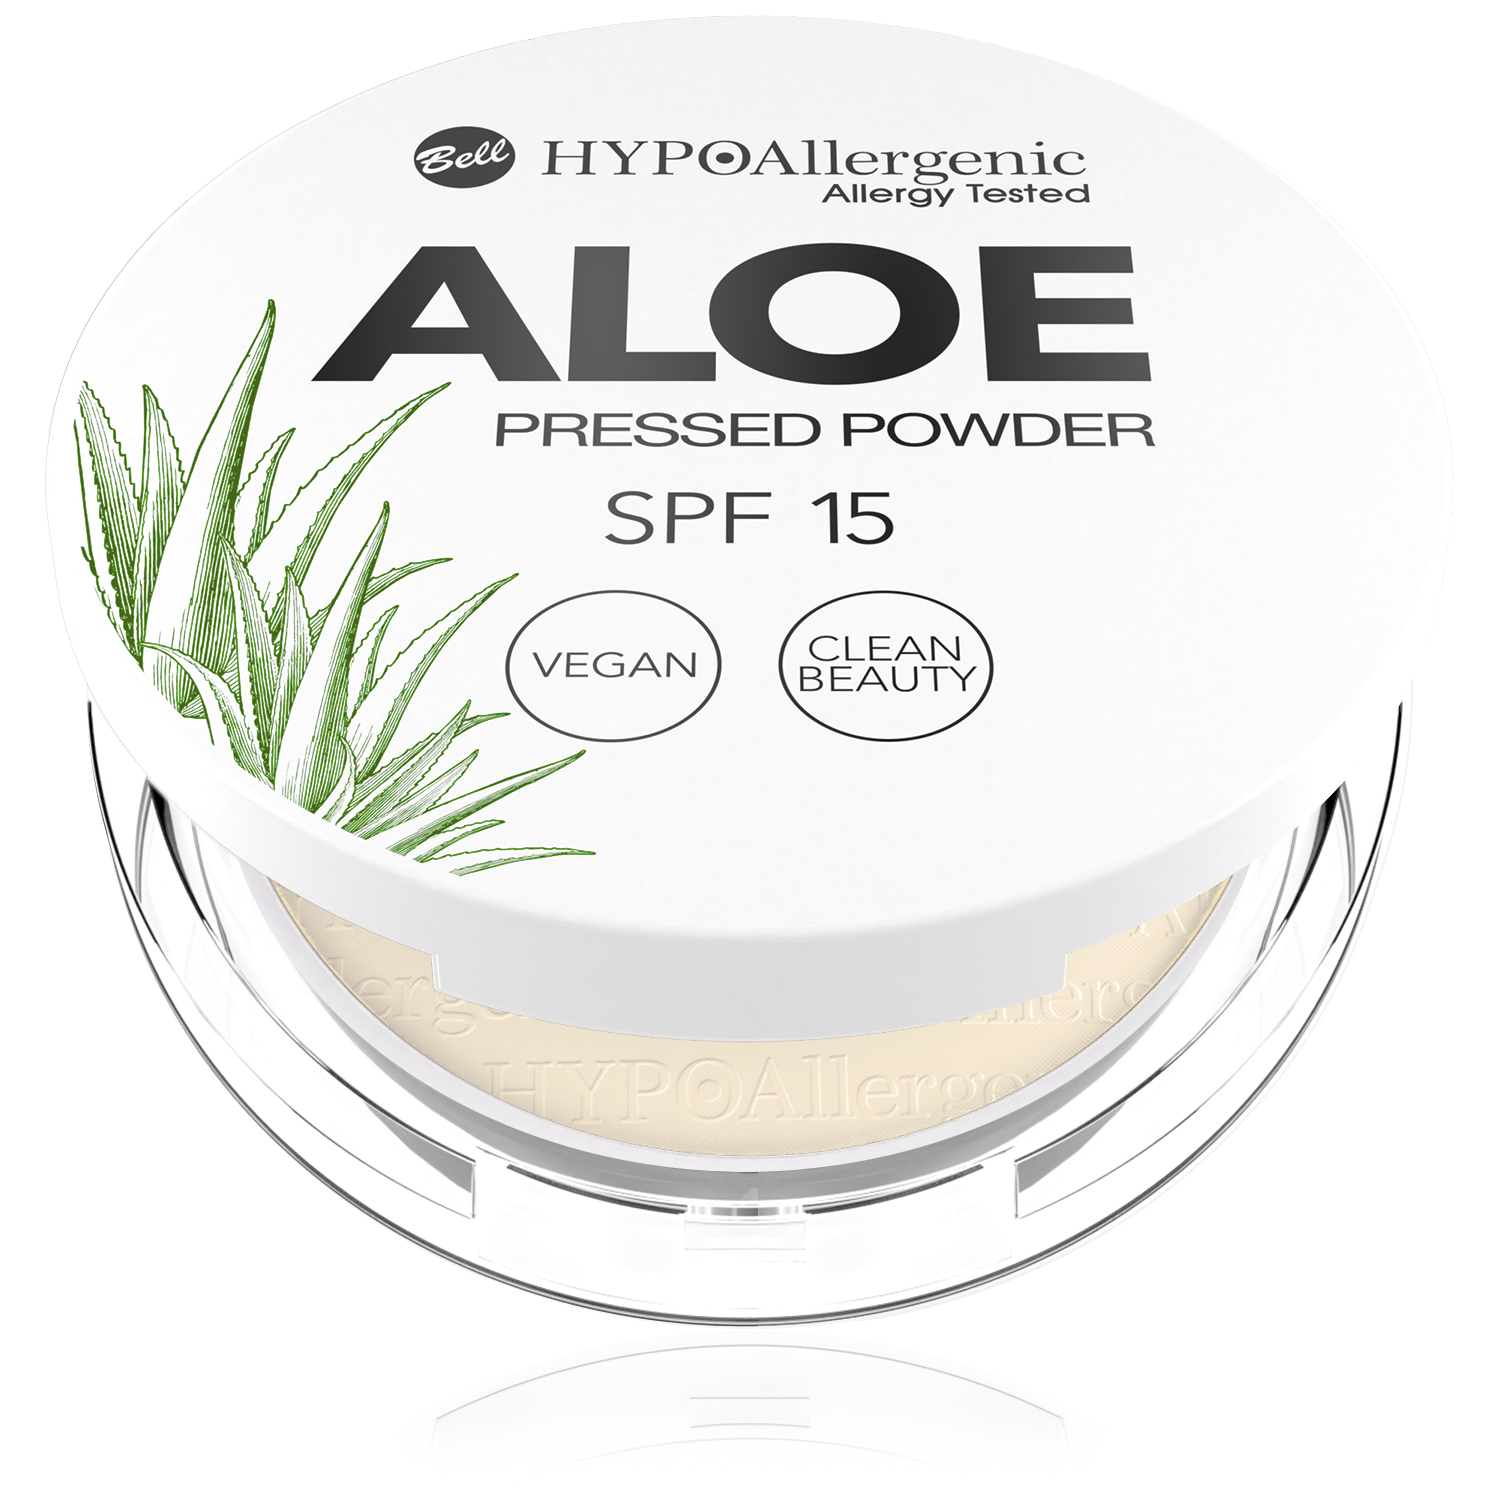 Bell HYPO Aloe Pressed Powder SPF 15, puder matująco-ochronny do twarzy, 02, 5g